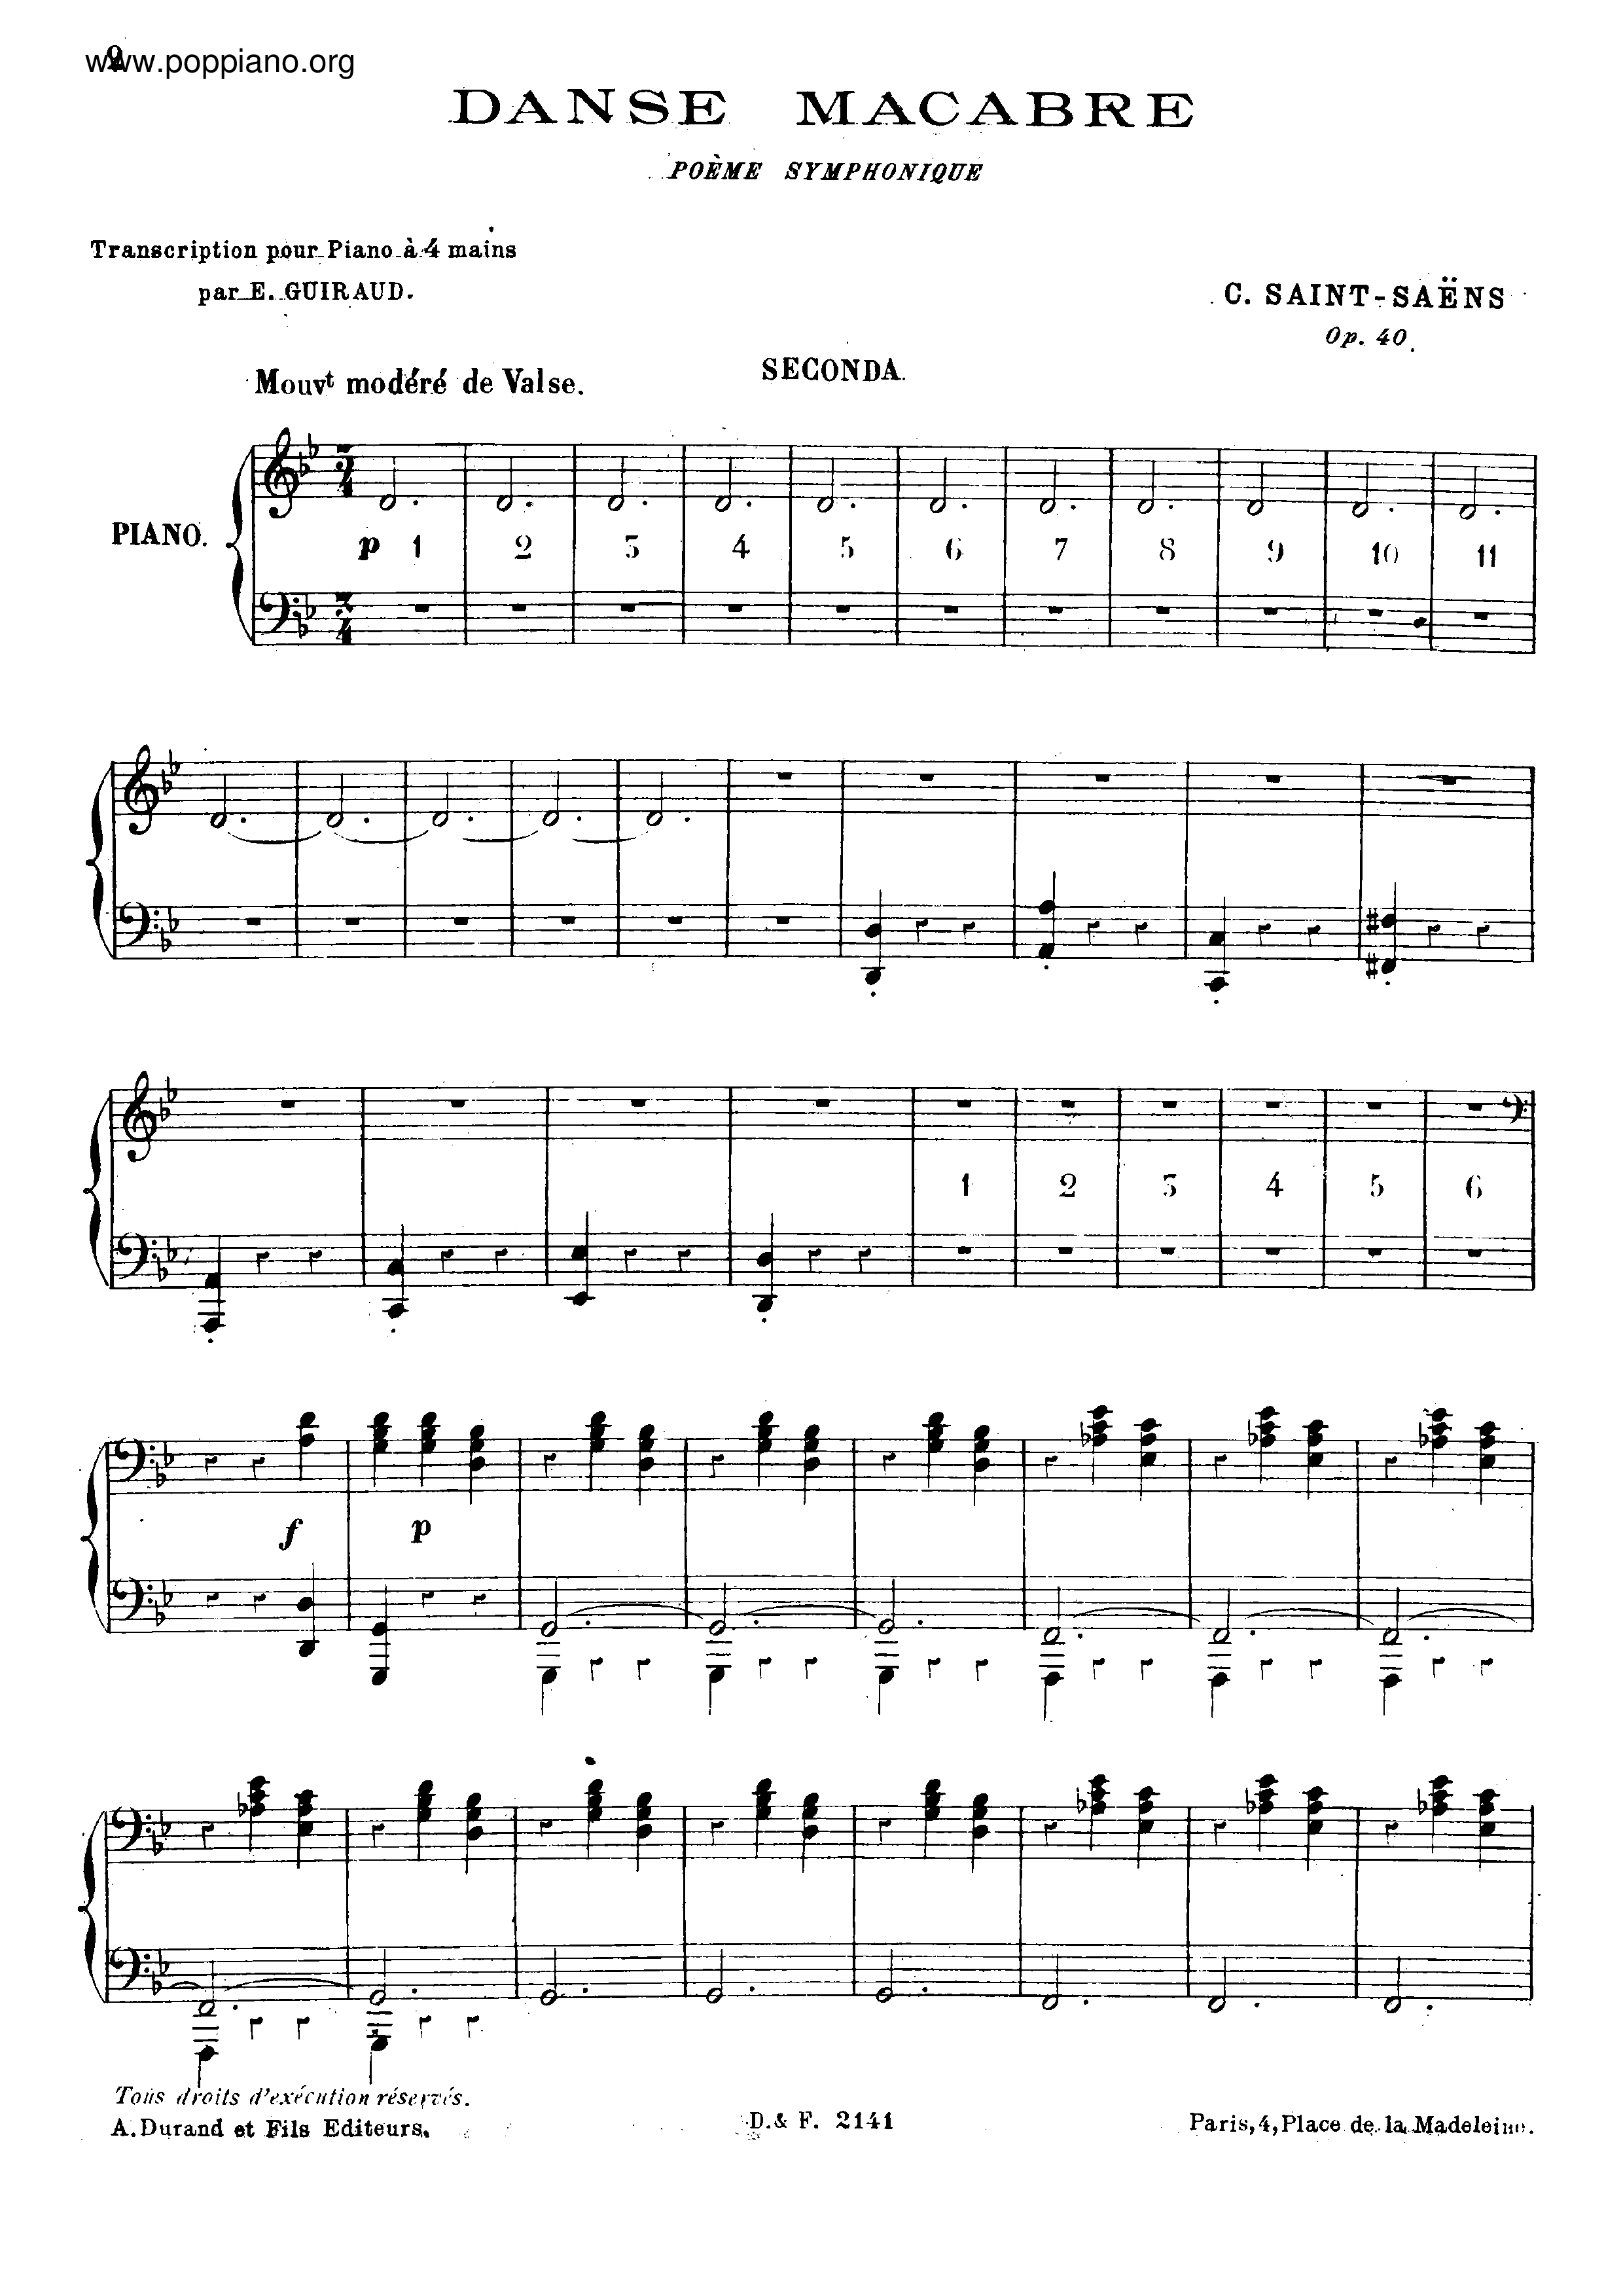 Danse Macabre Op.40, by Saint-Saens, S.555琴谱